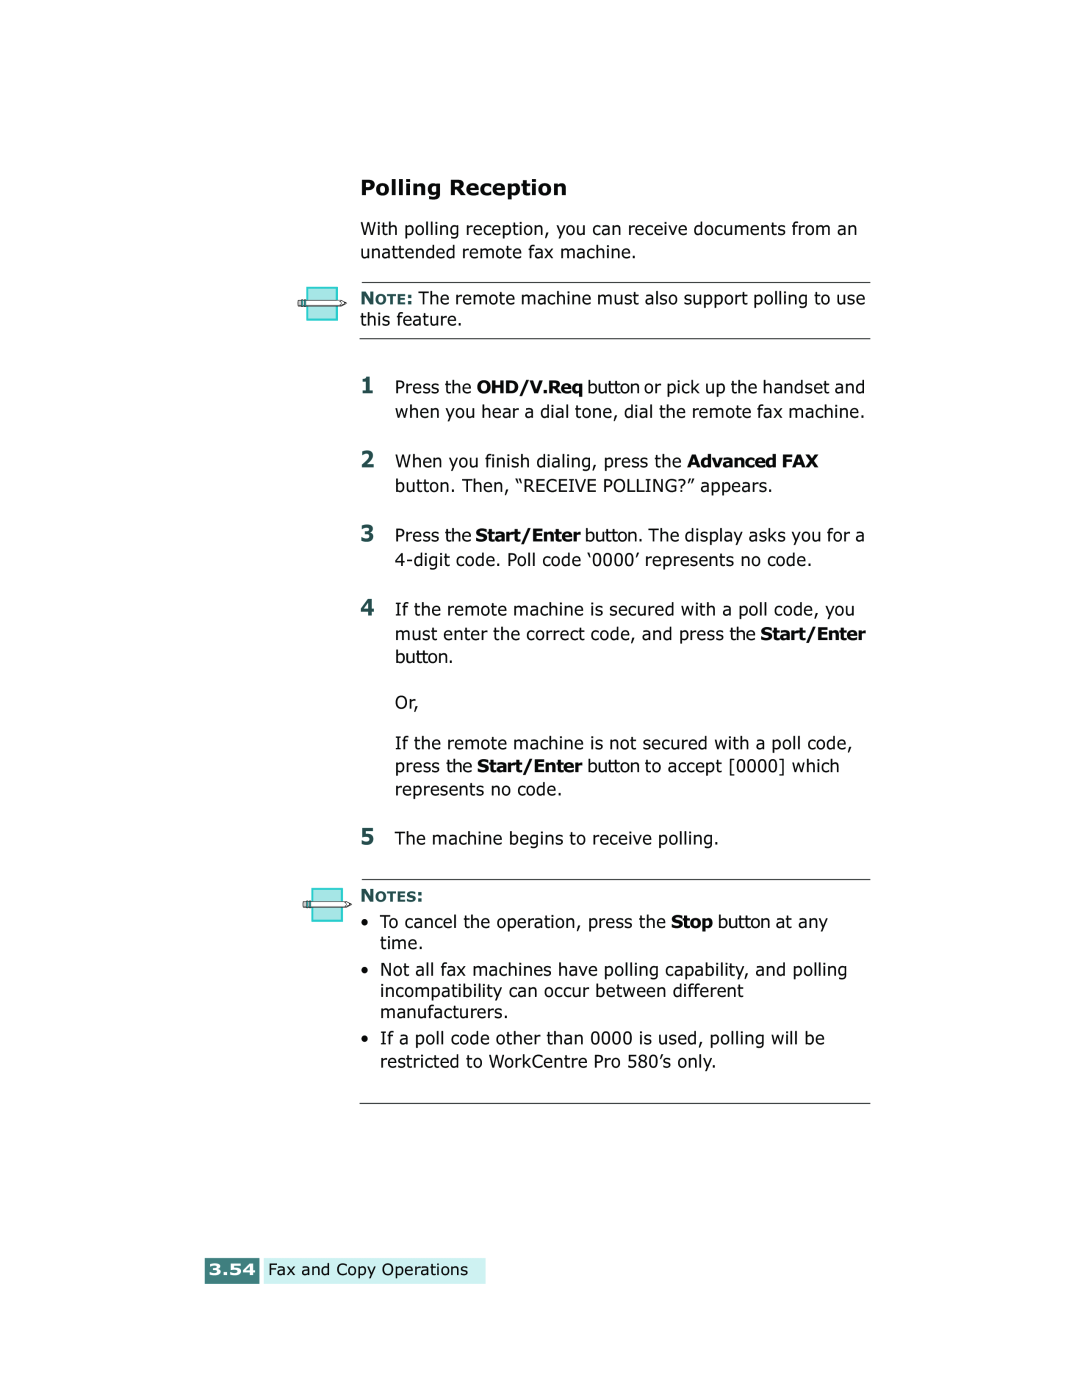 Xerox Pro 580 manual Polling Reception 